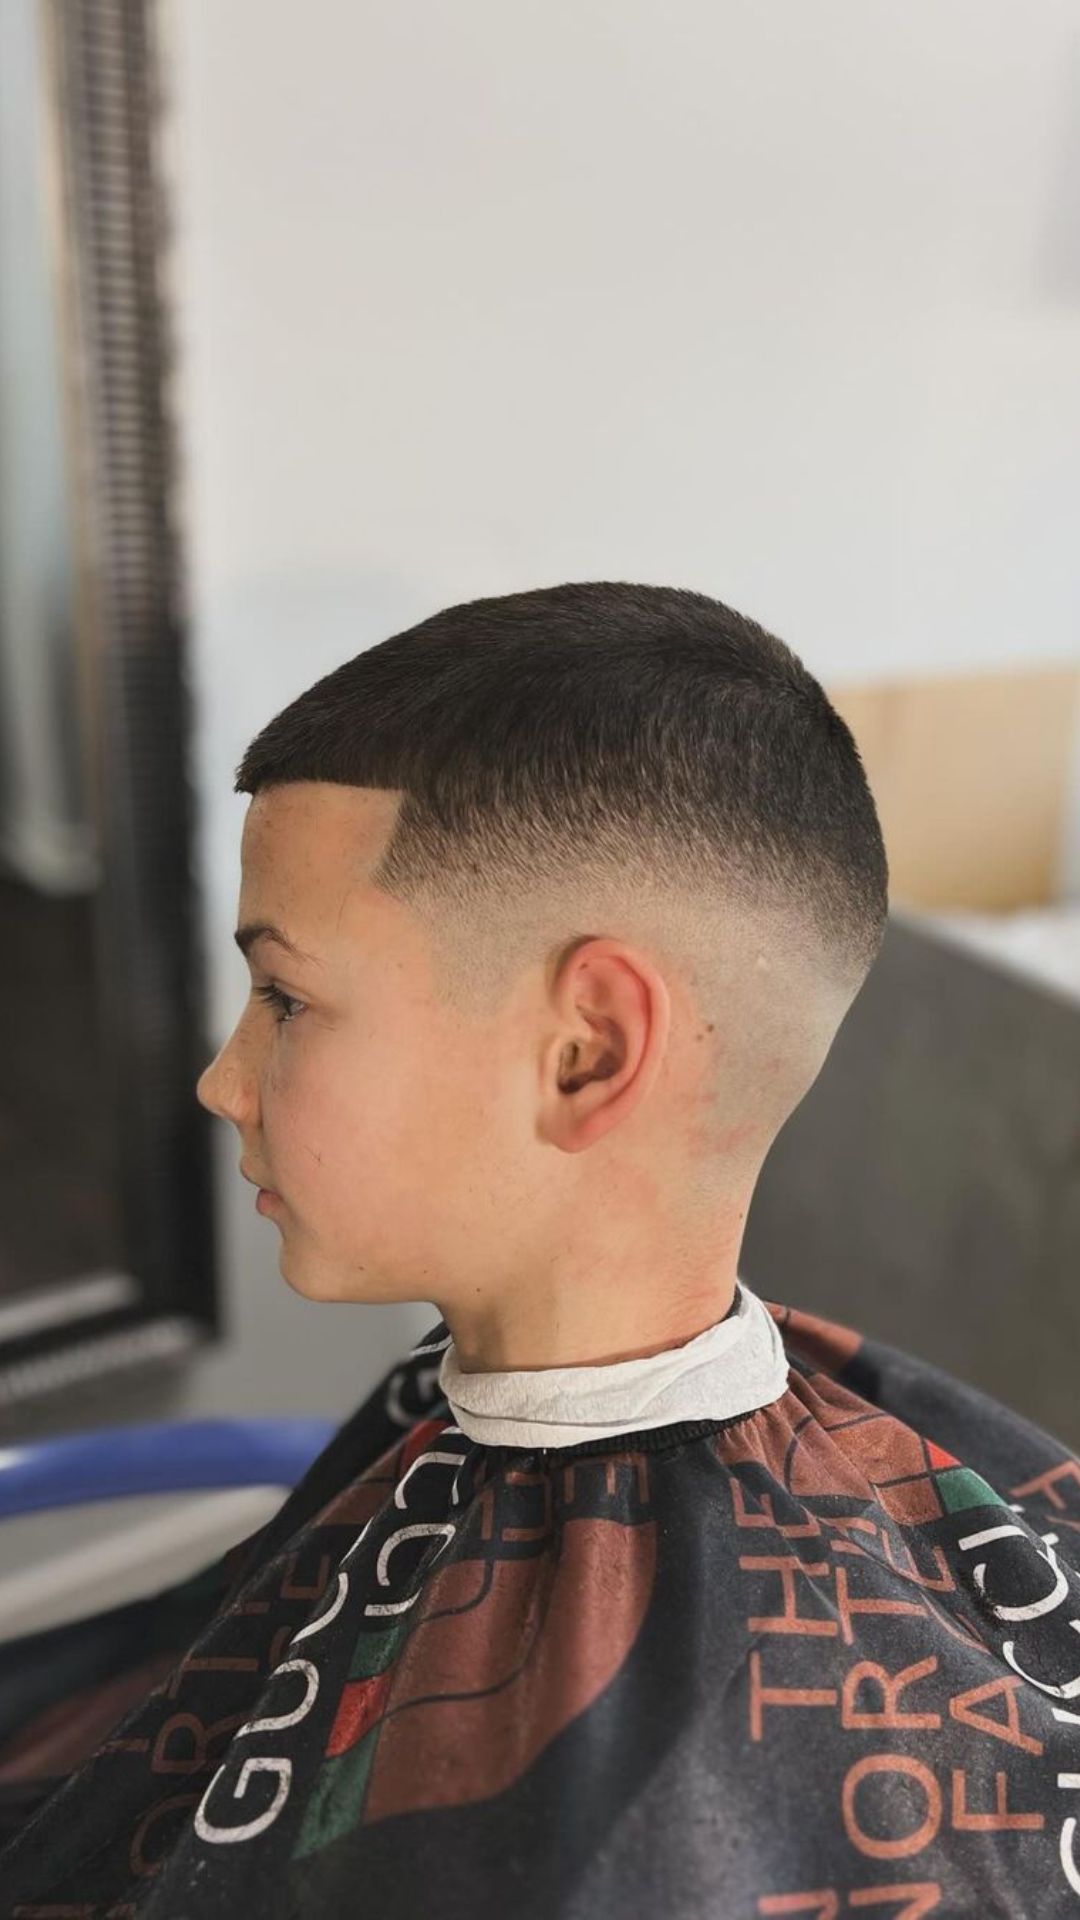 A boy with a buzz cut.